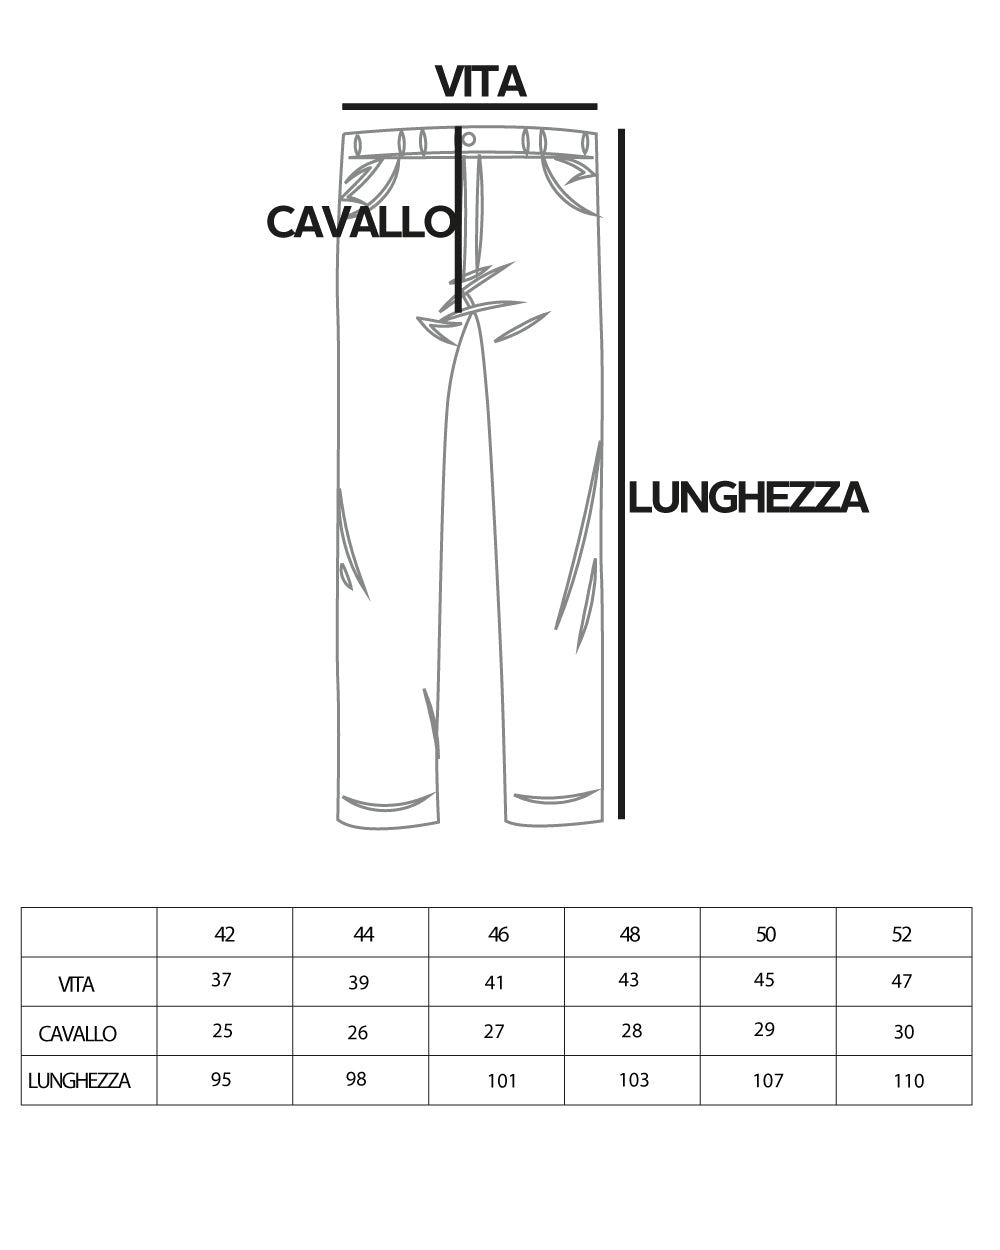 Pantaloni Uomo Cargo Con Zip Tasconi Casual Basic Blu GIOSAL-P5576A